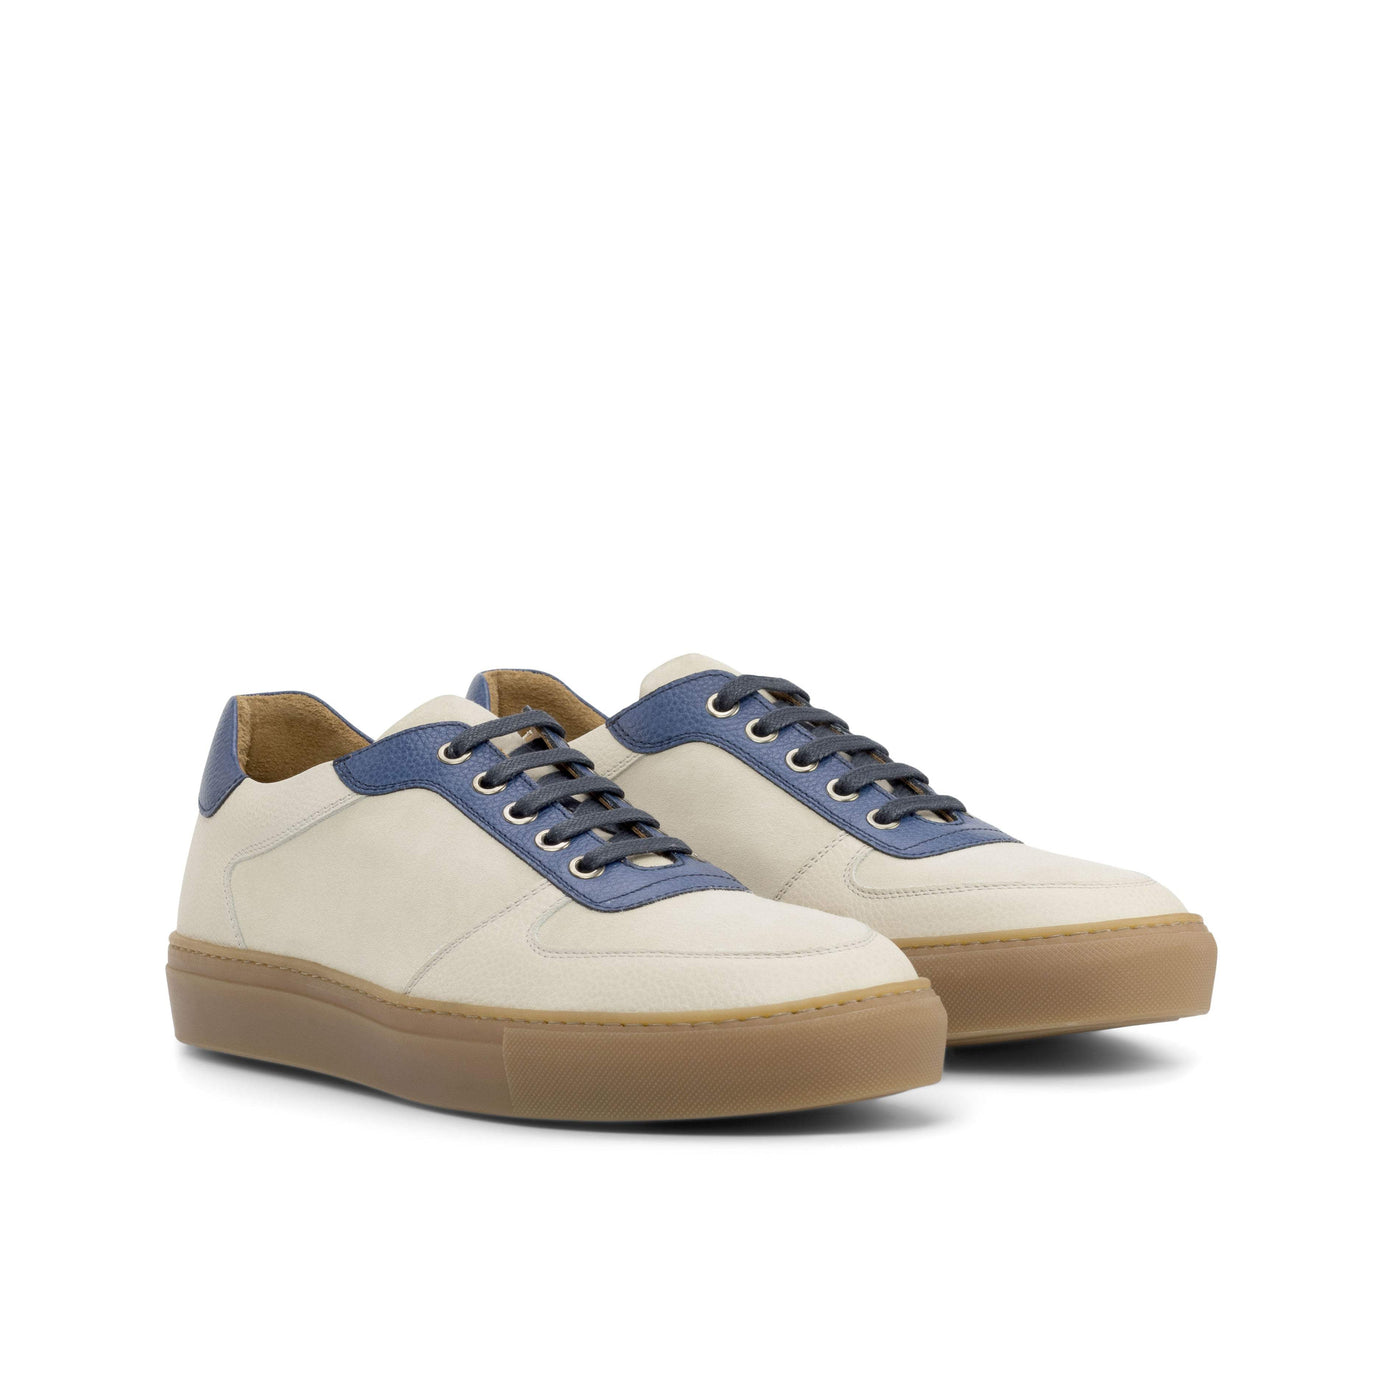 Men's Low Top Trainer Shoes Leather White 4890 3- MERRIMIUM